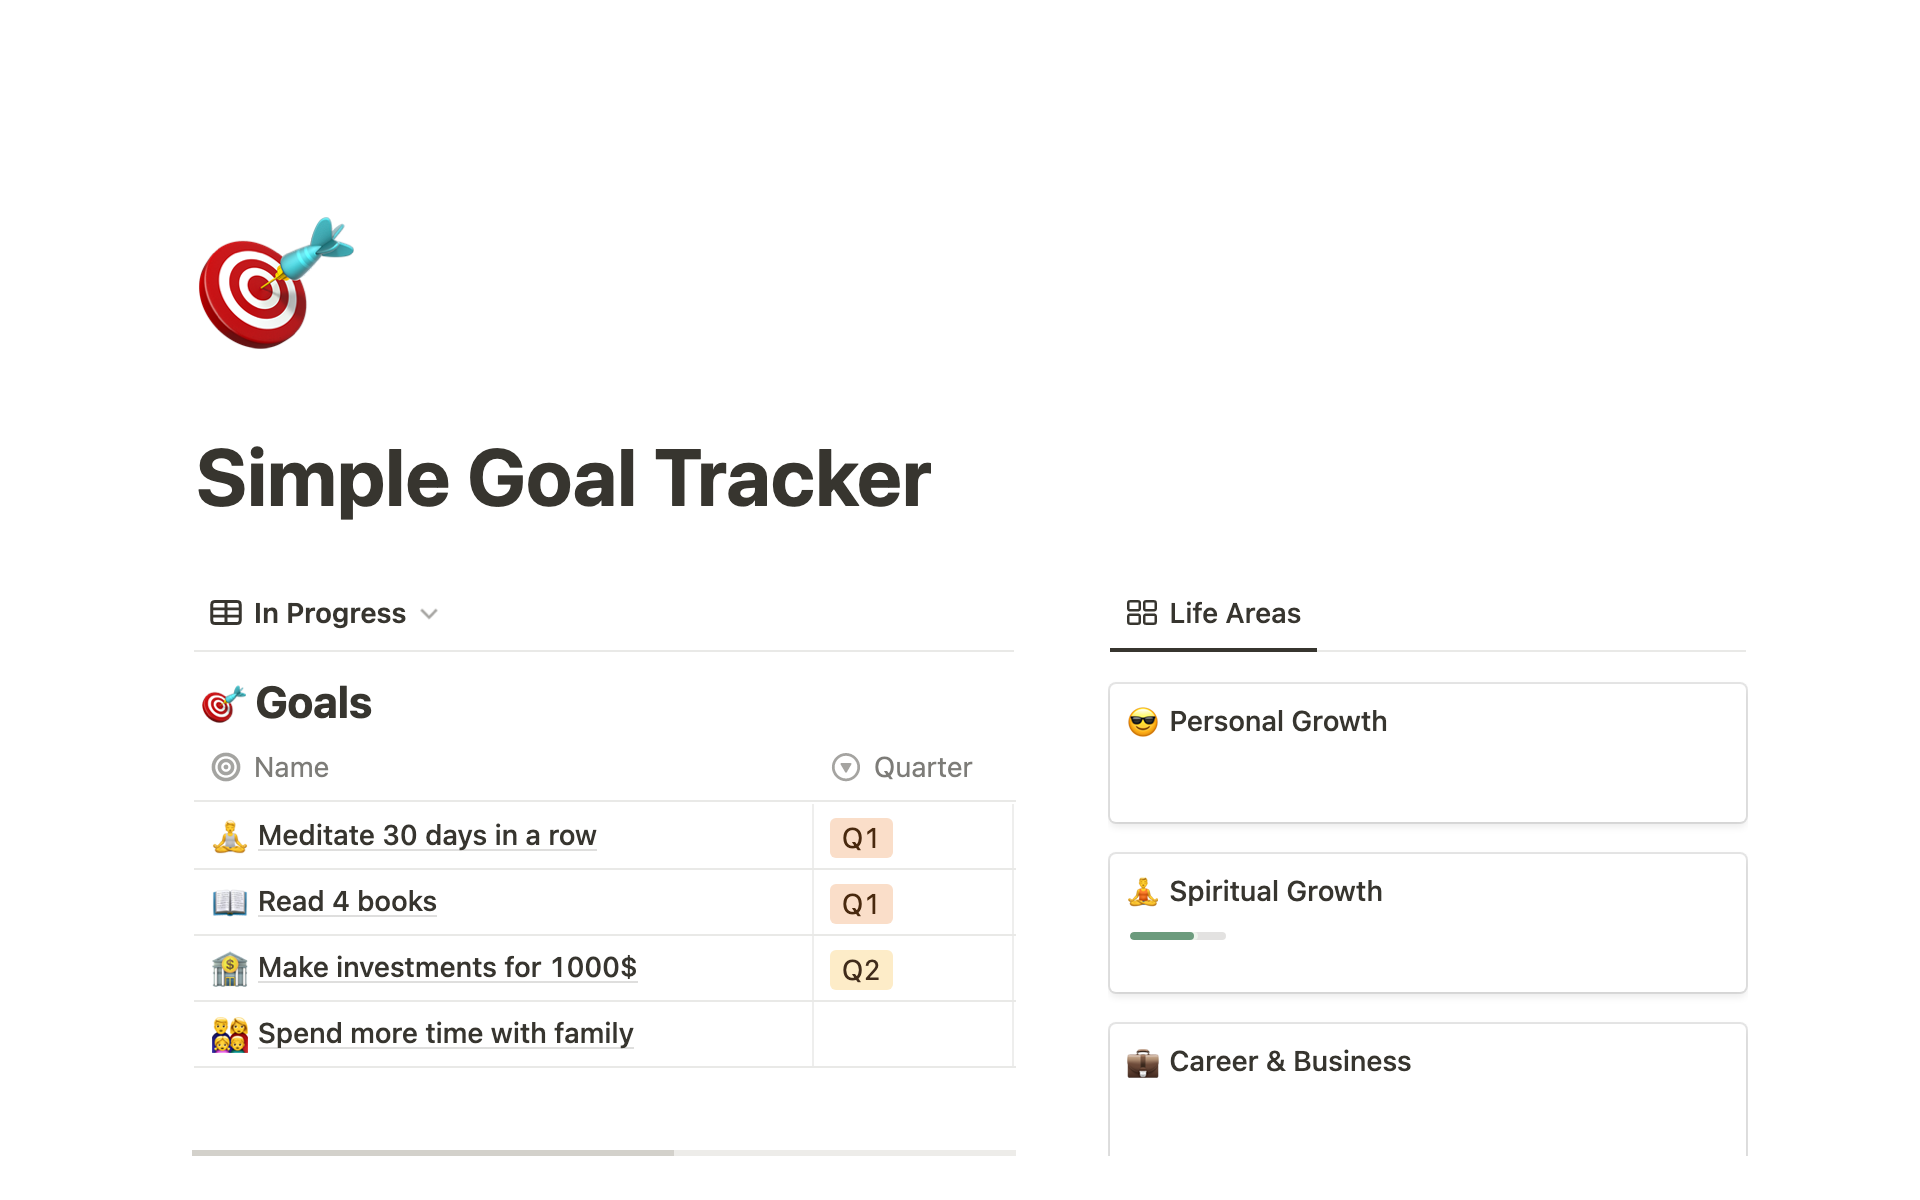 Vista previa de una plantilla para Simple Goal Tracker